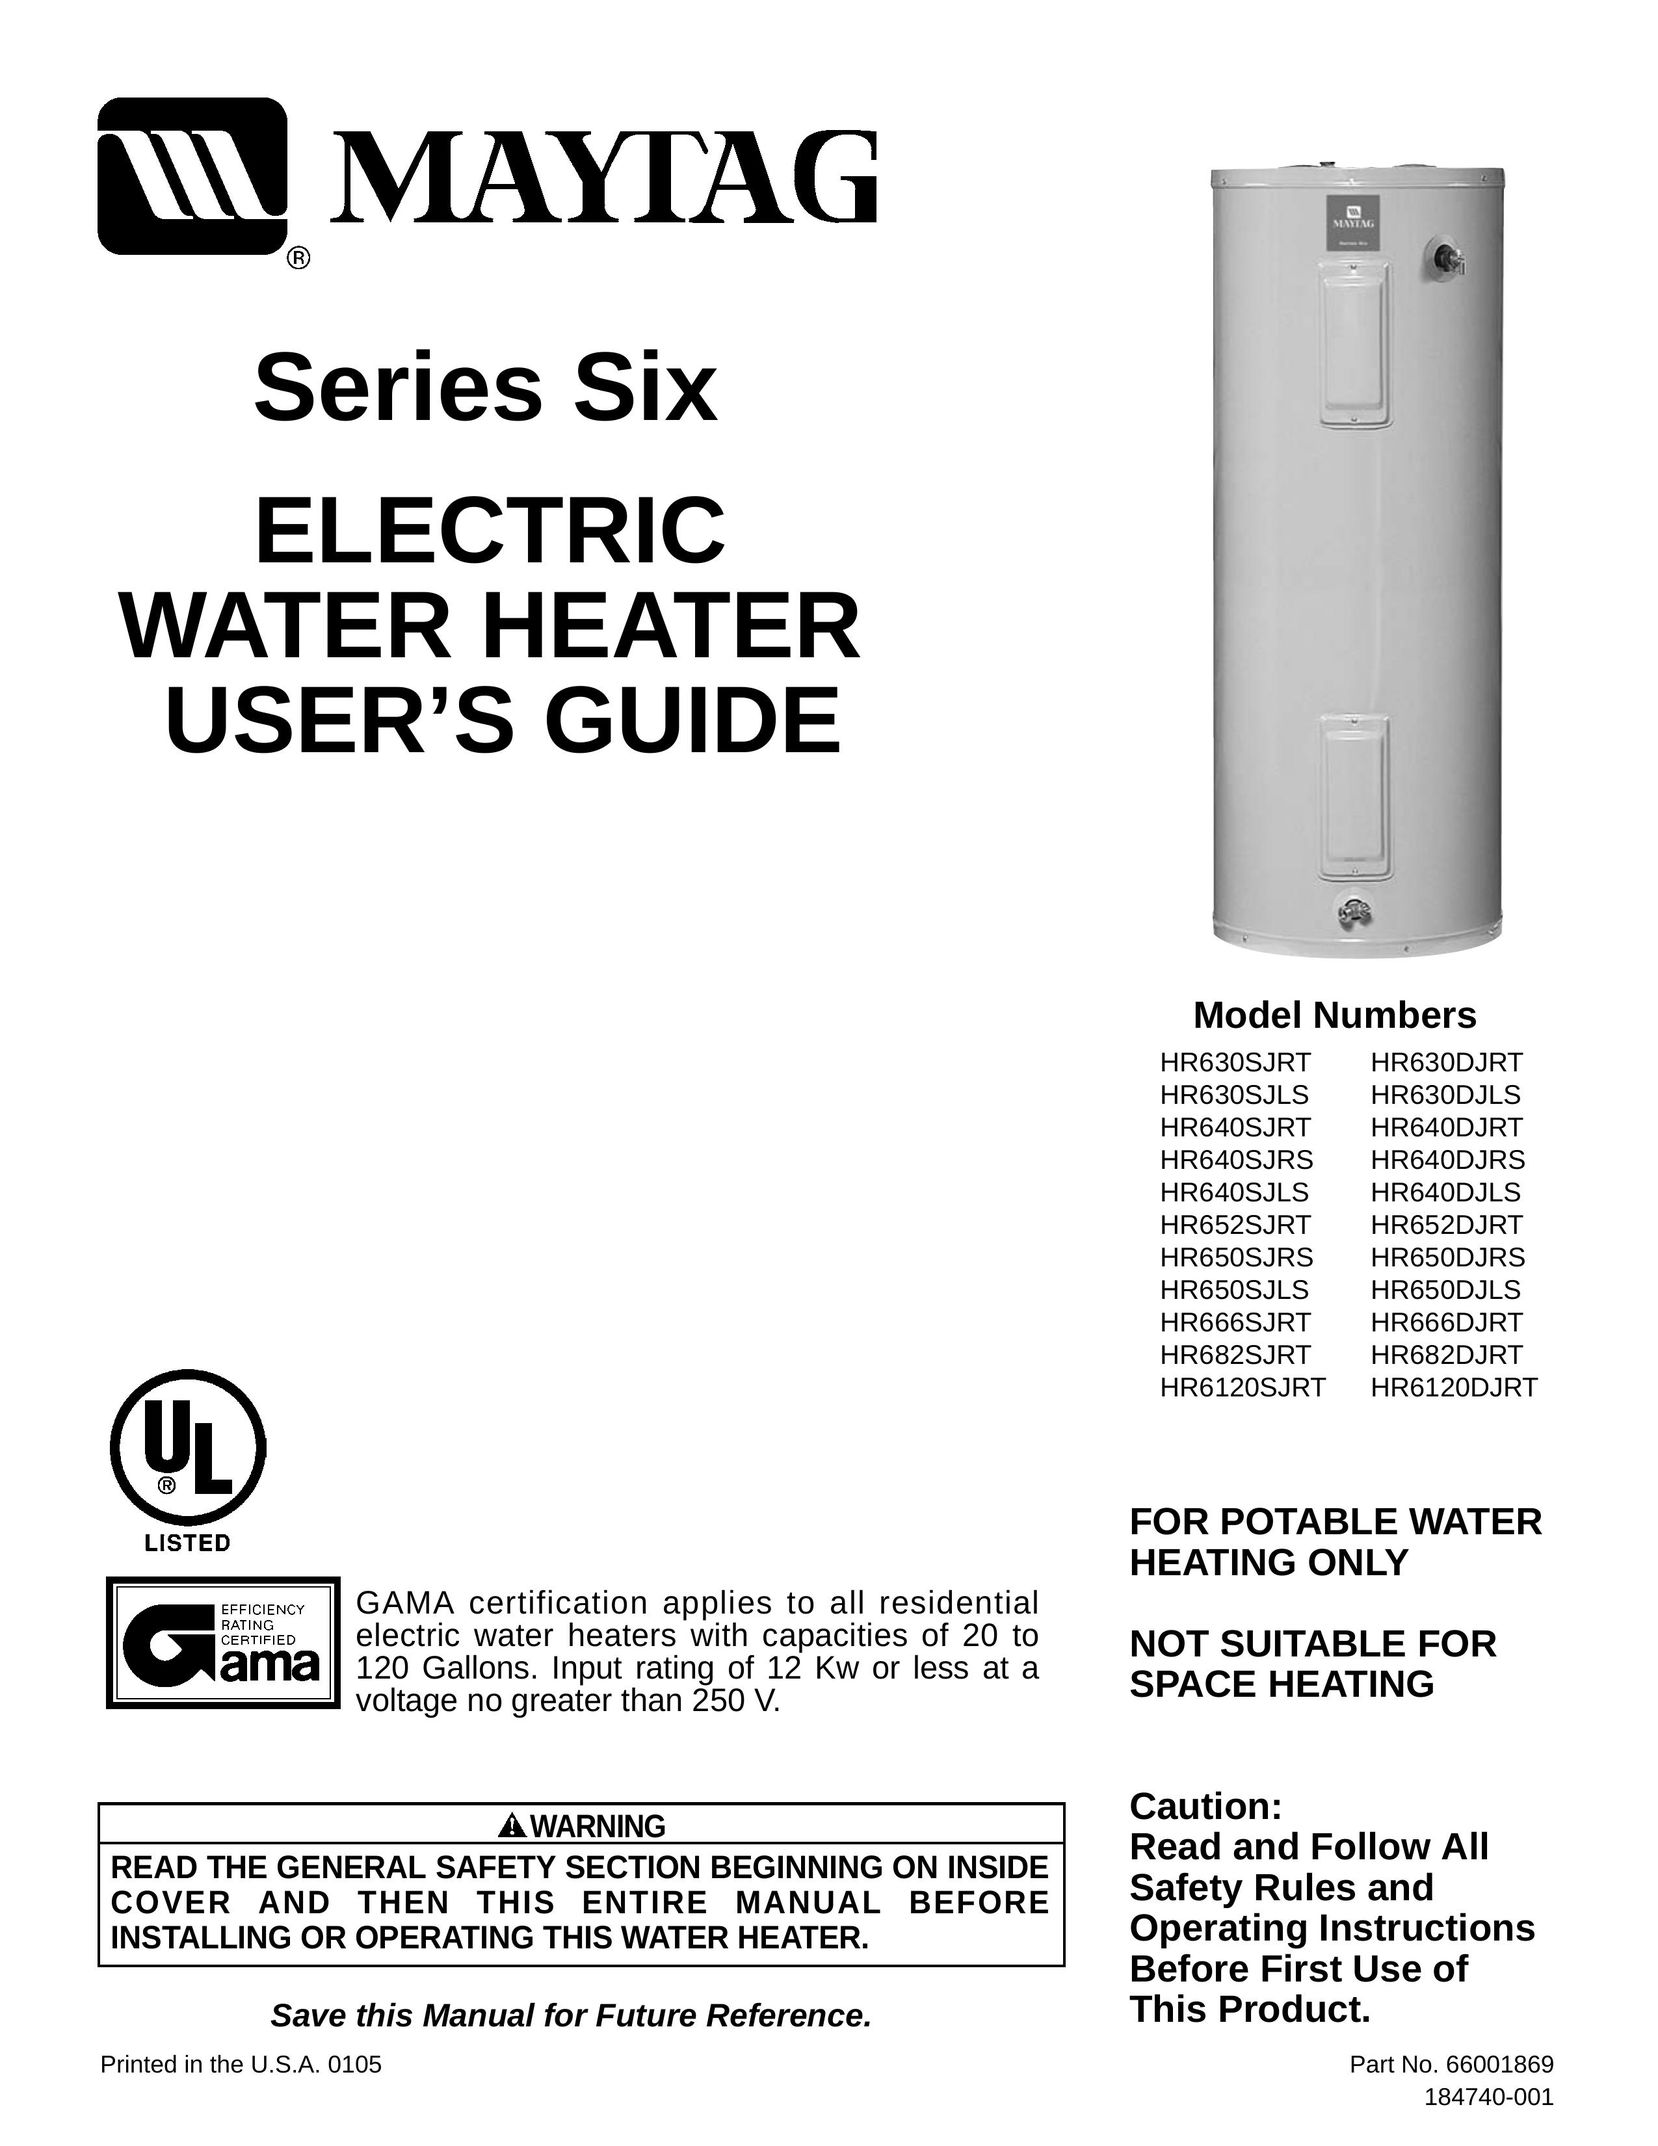 Maytag HR650SJLS Water Heater User Manual